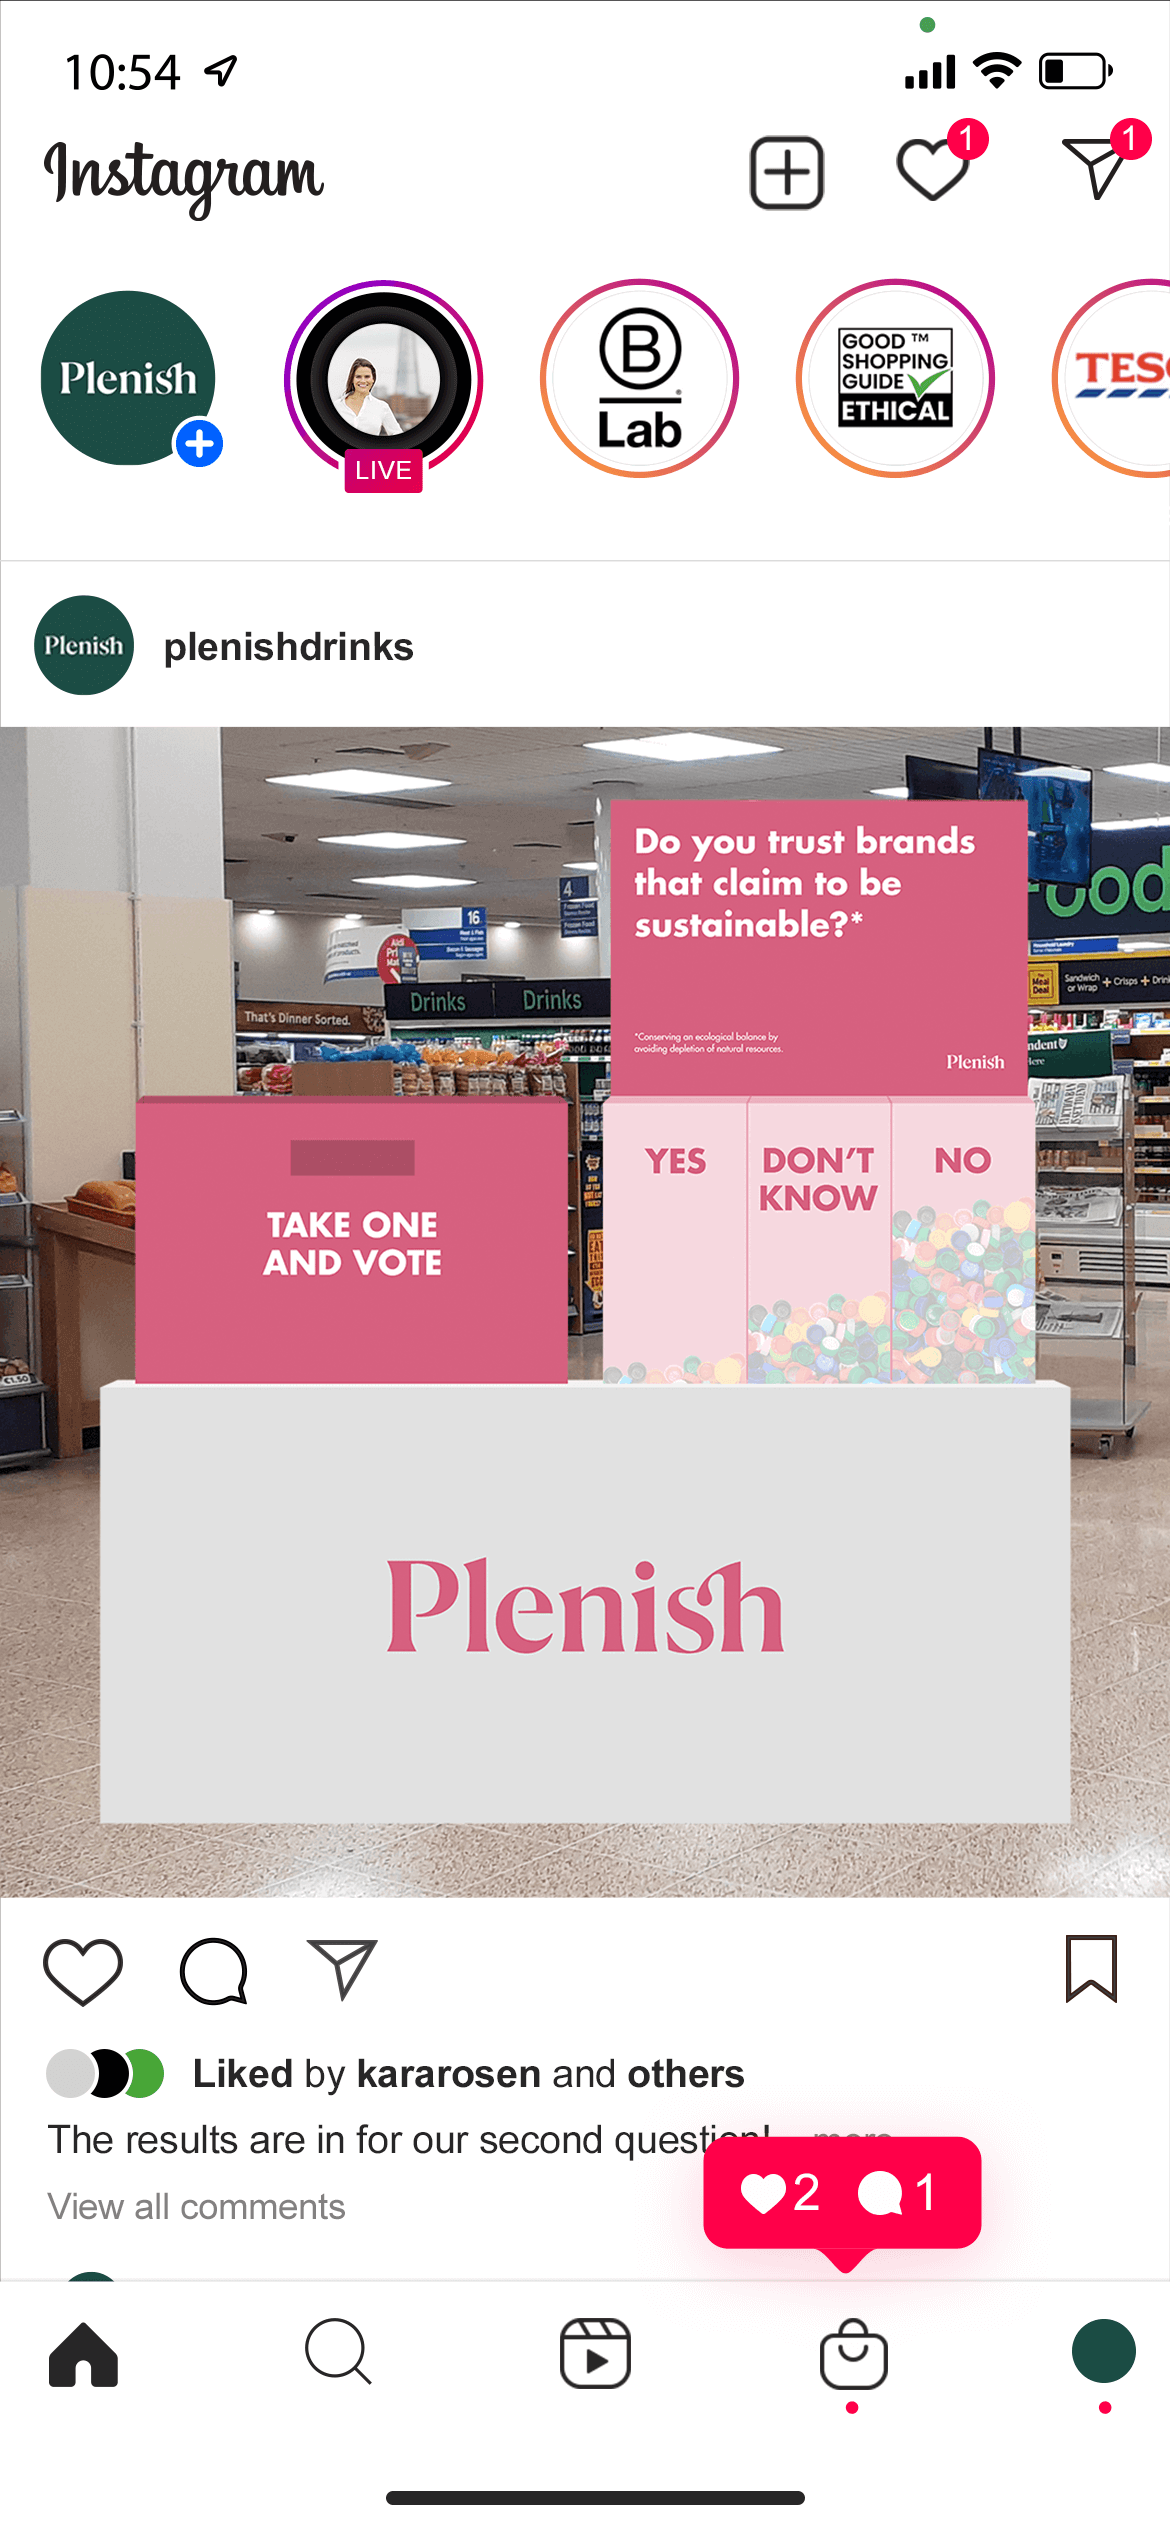 plenish-milks-campaign-instagram-post-2